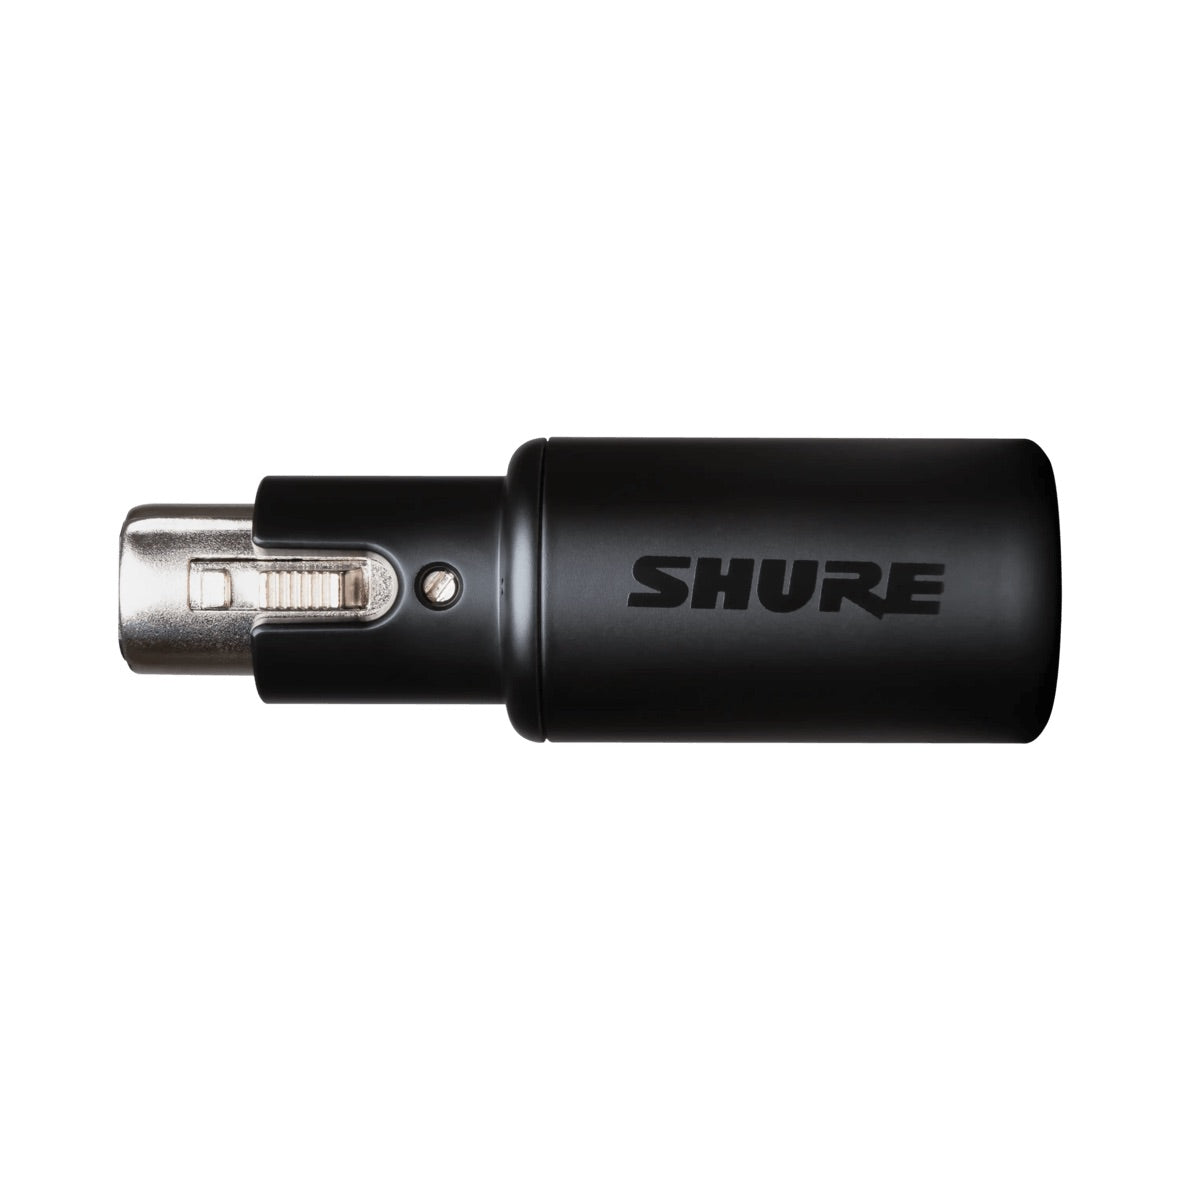 Shure MVX2U - Digital Audio Interface, side